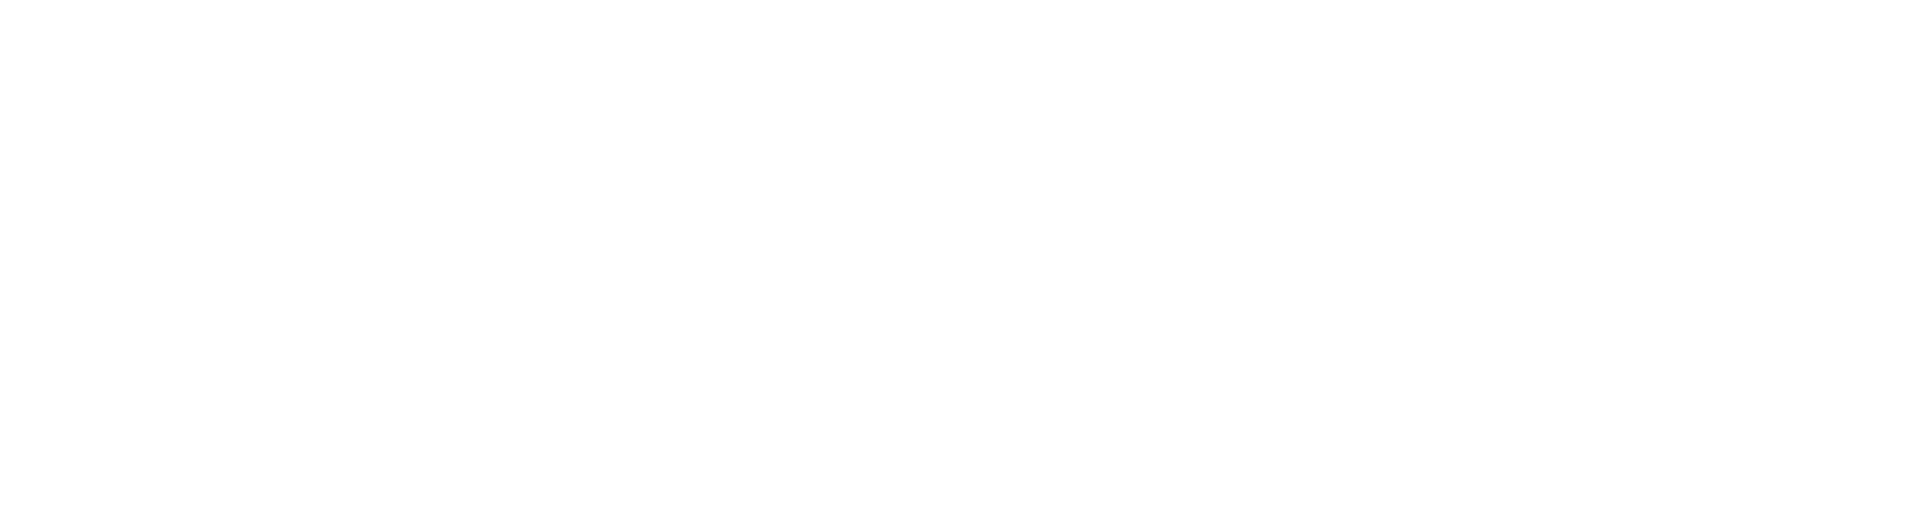 TIF Logo - NDDOT - Media and Downloads